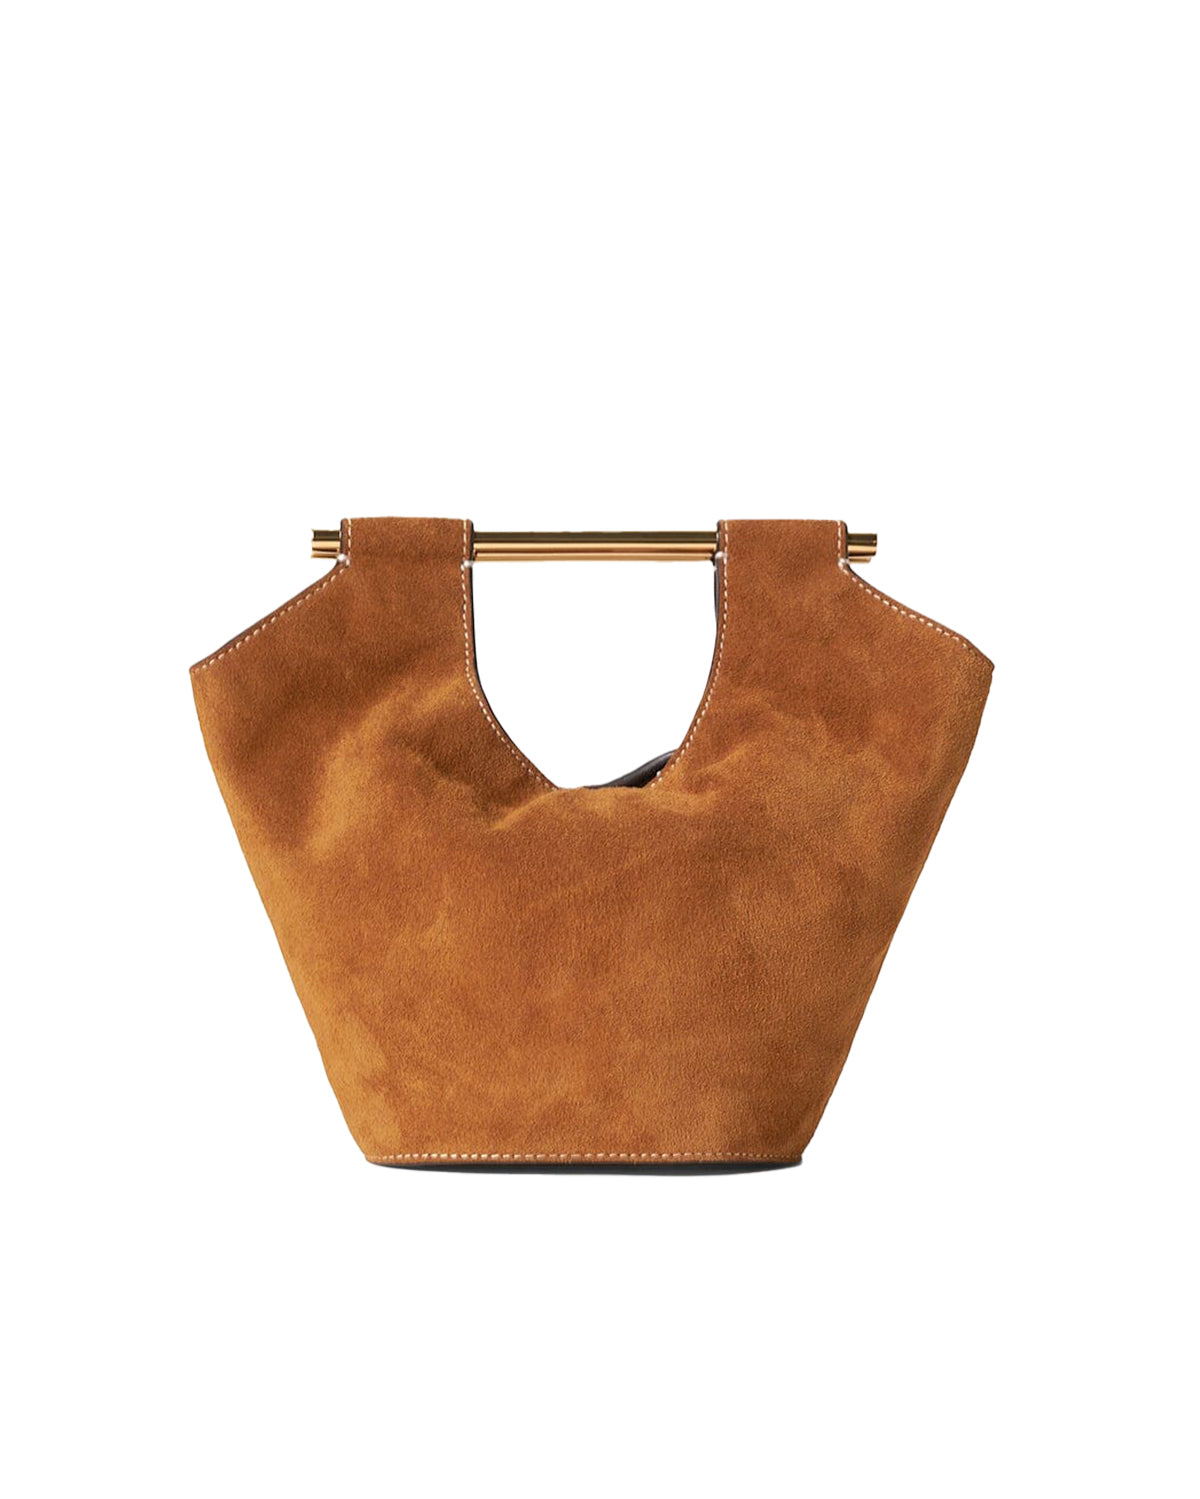 Mar Mini Bucket Bag (Tan)